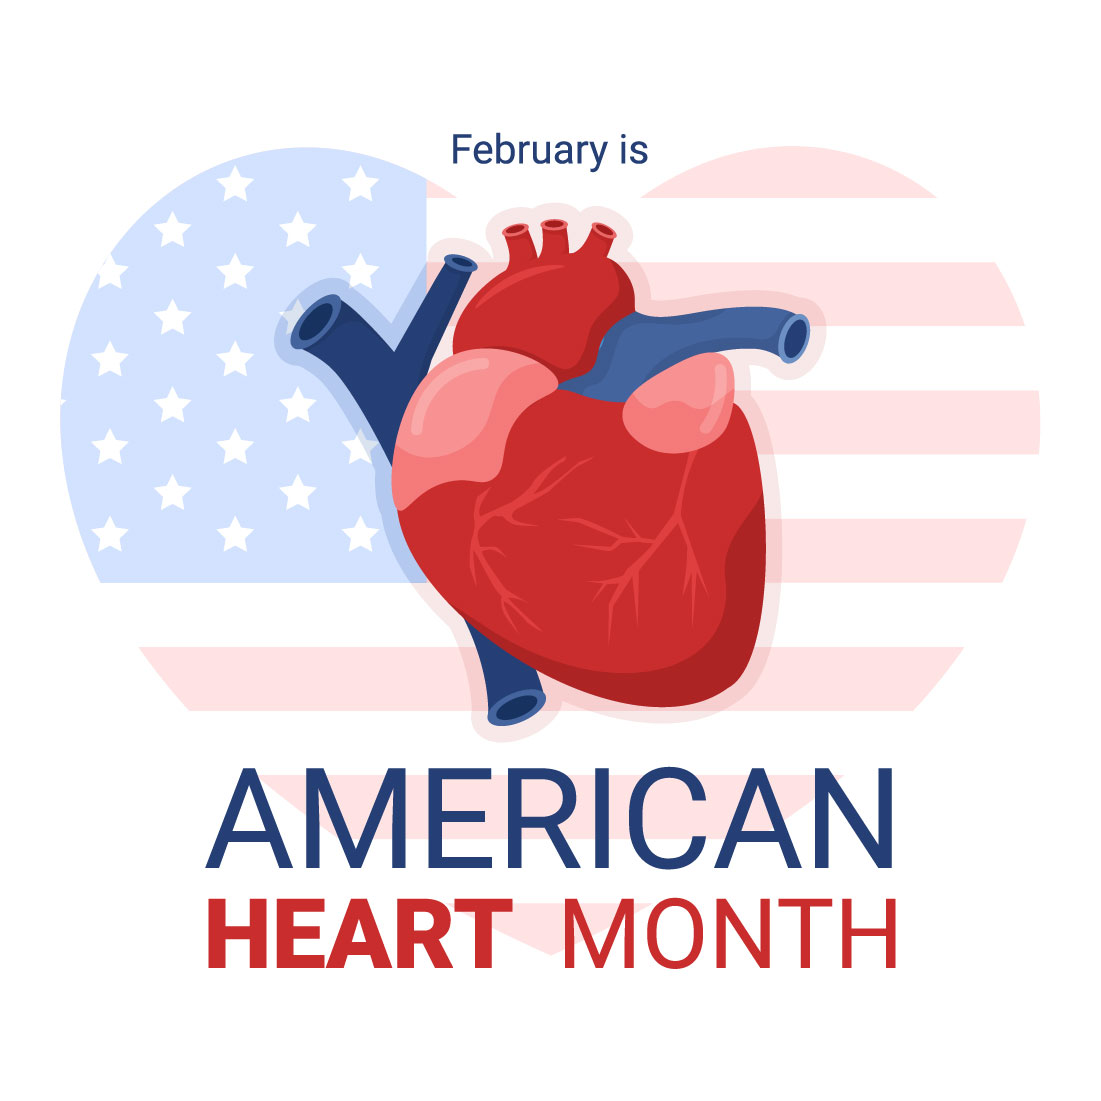 American Heart Month Cartoon Illustration Design cover image.